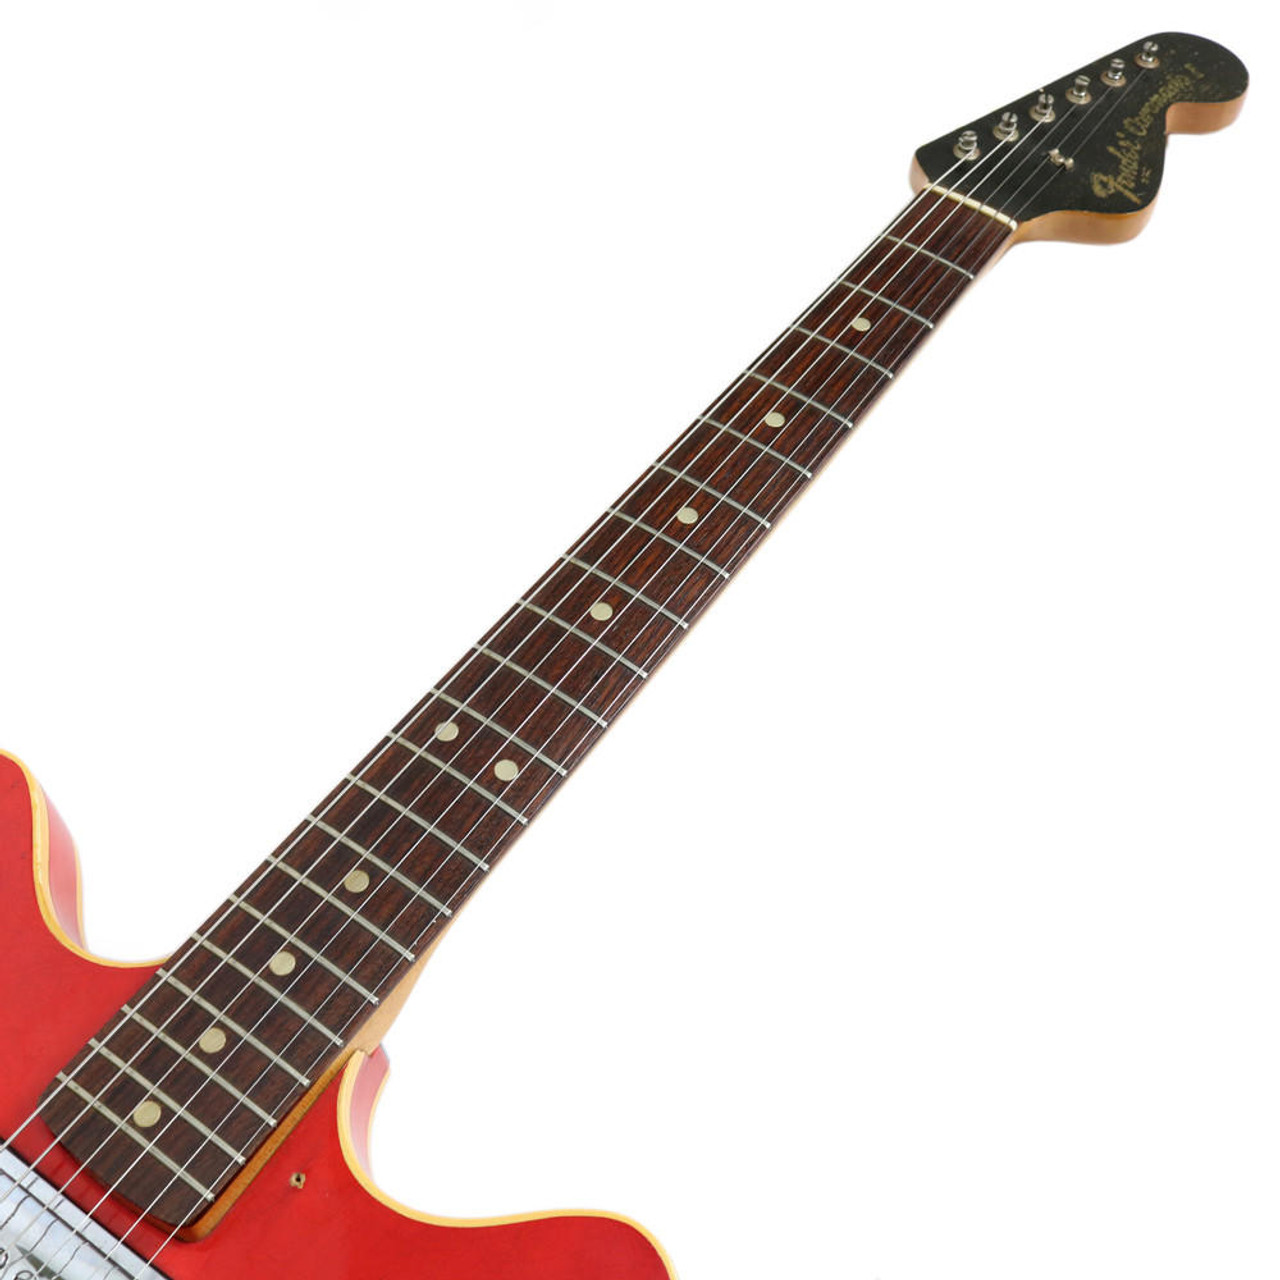 Vintage 1966 Fender Coronado I Hollow Body Electric Guitar Cherry Finish